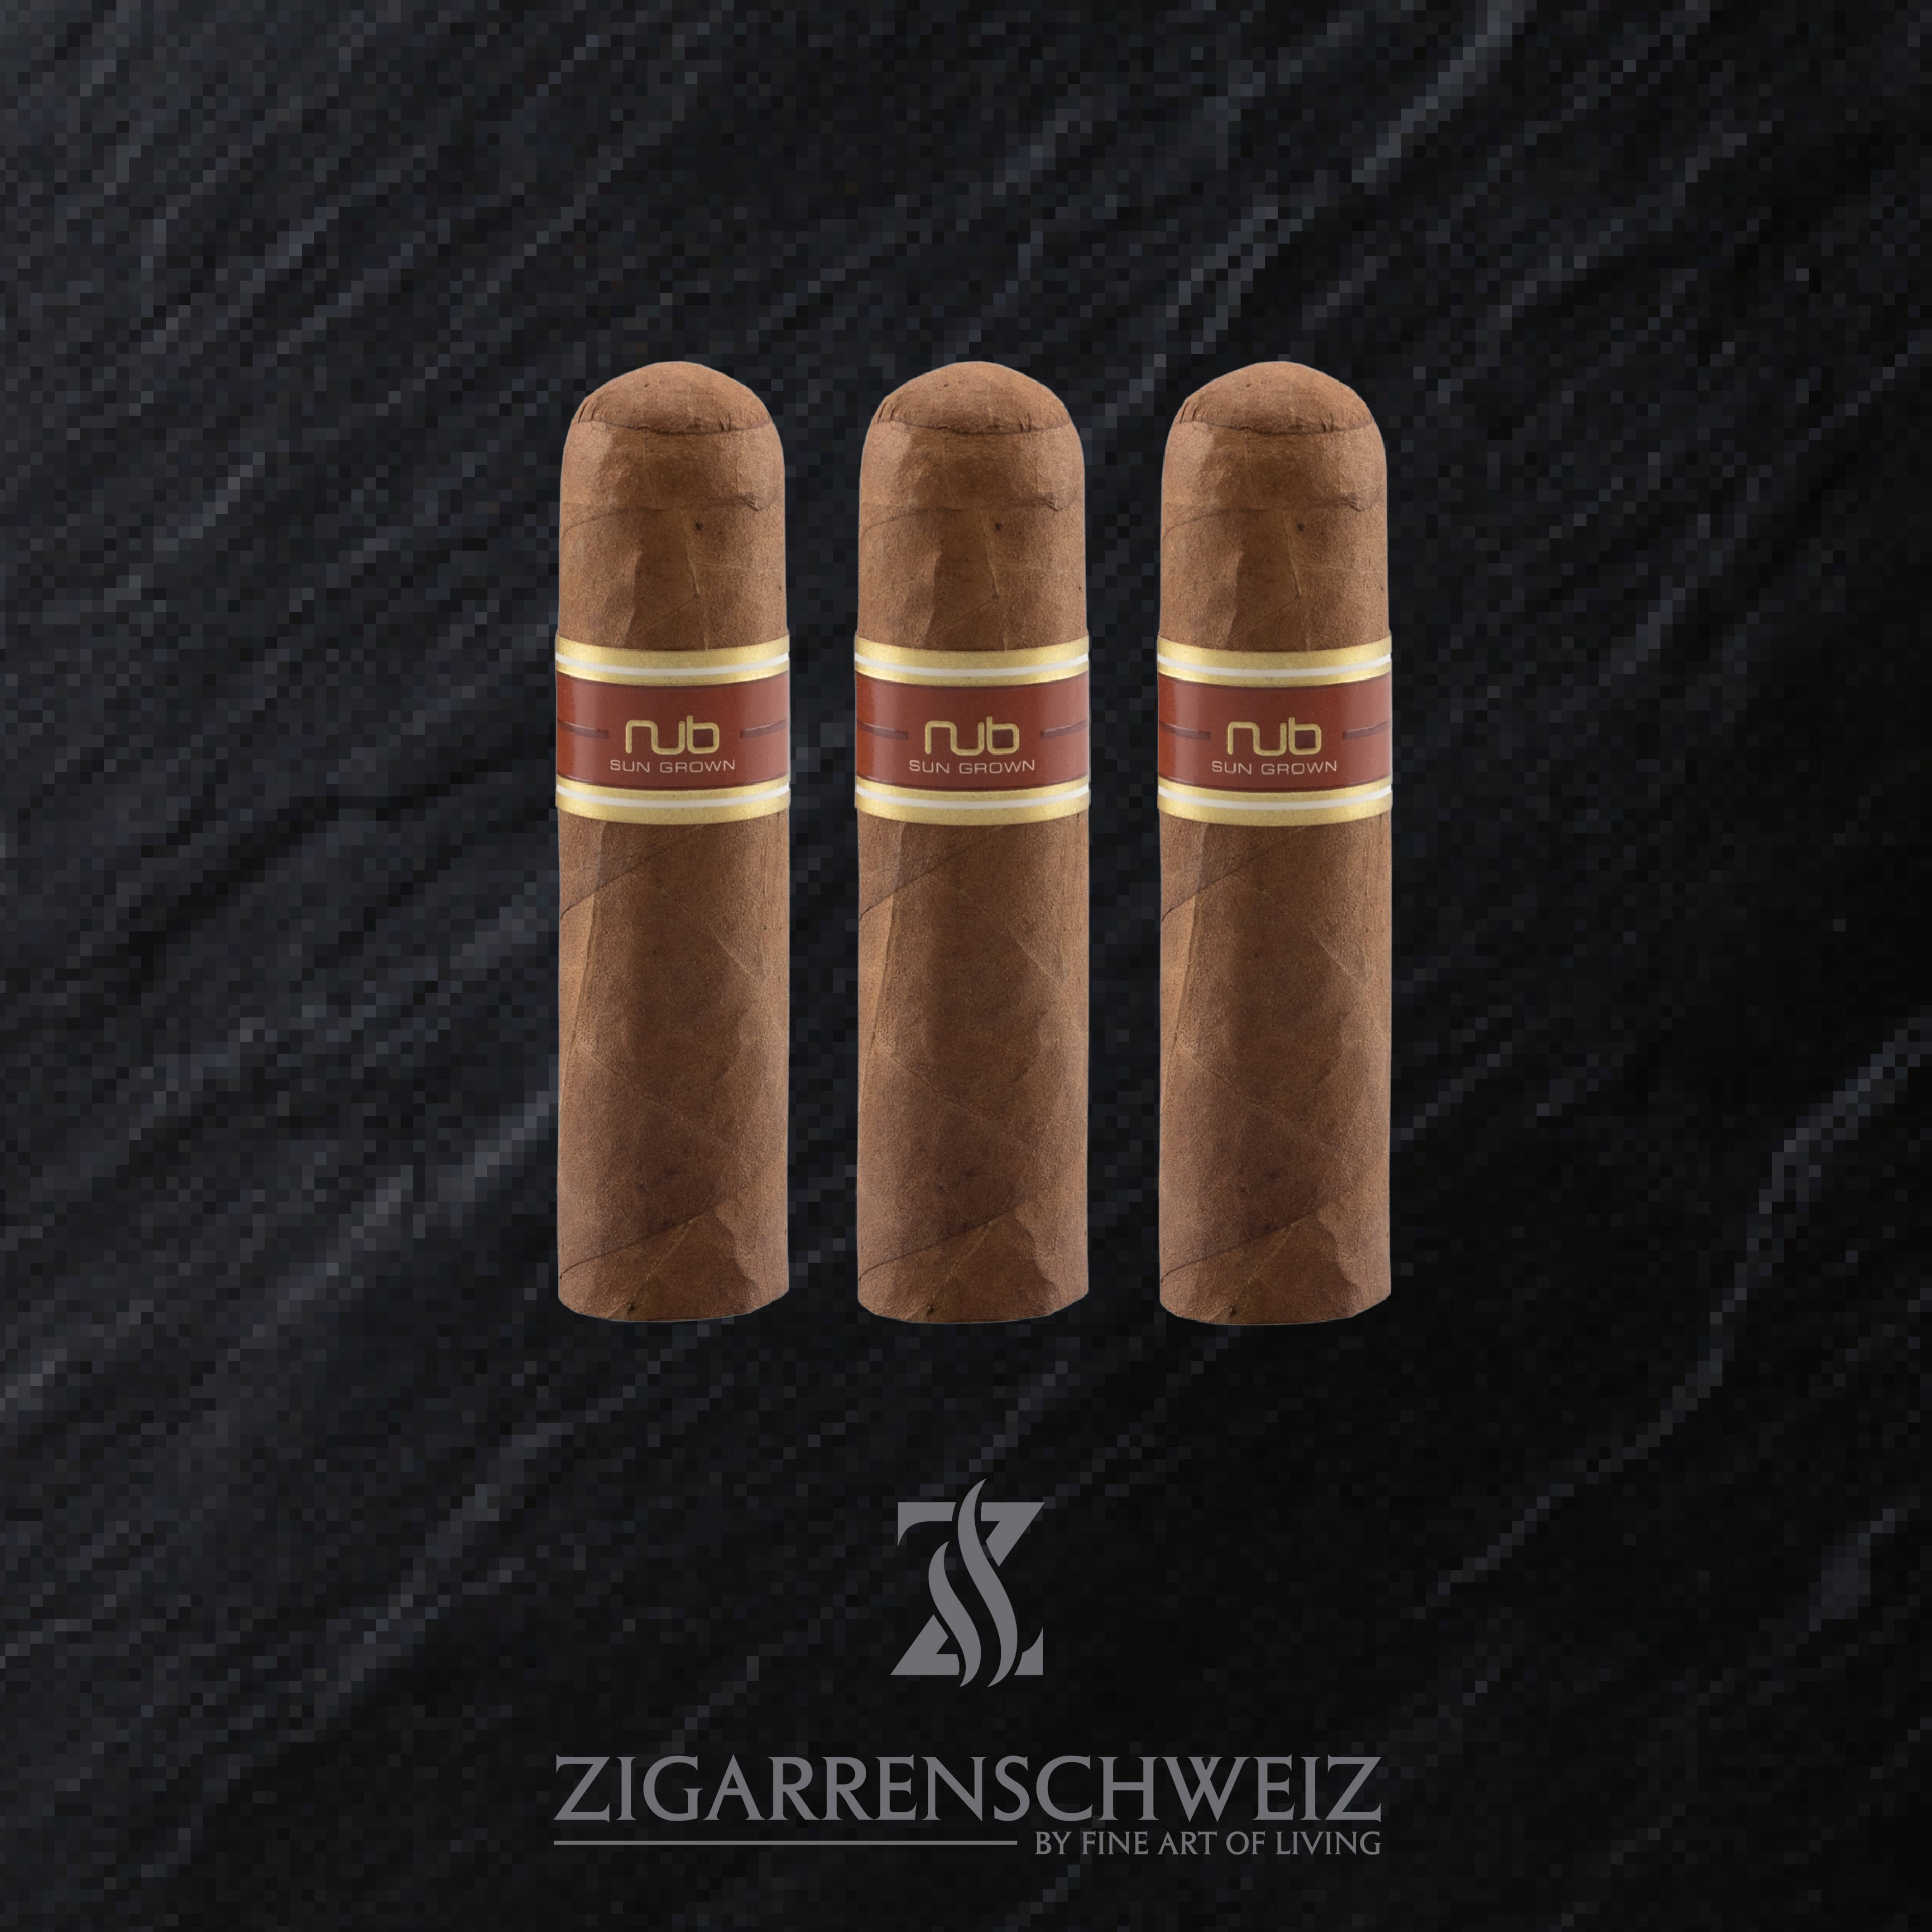 NUB Sungrown 358 Zigarren 3er Etui von Zigarren Schweiz